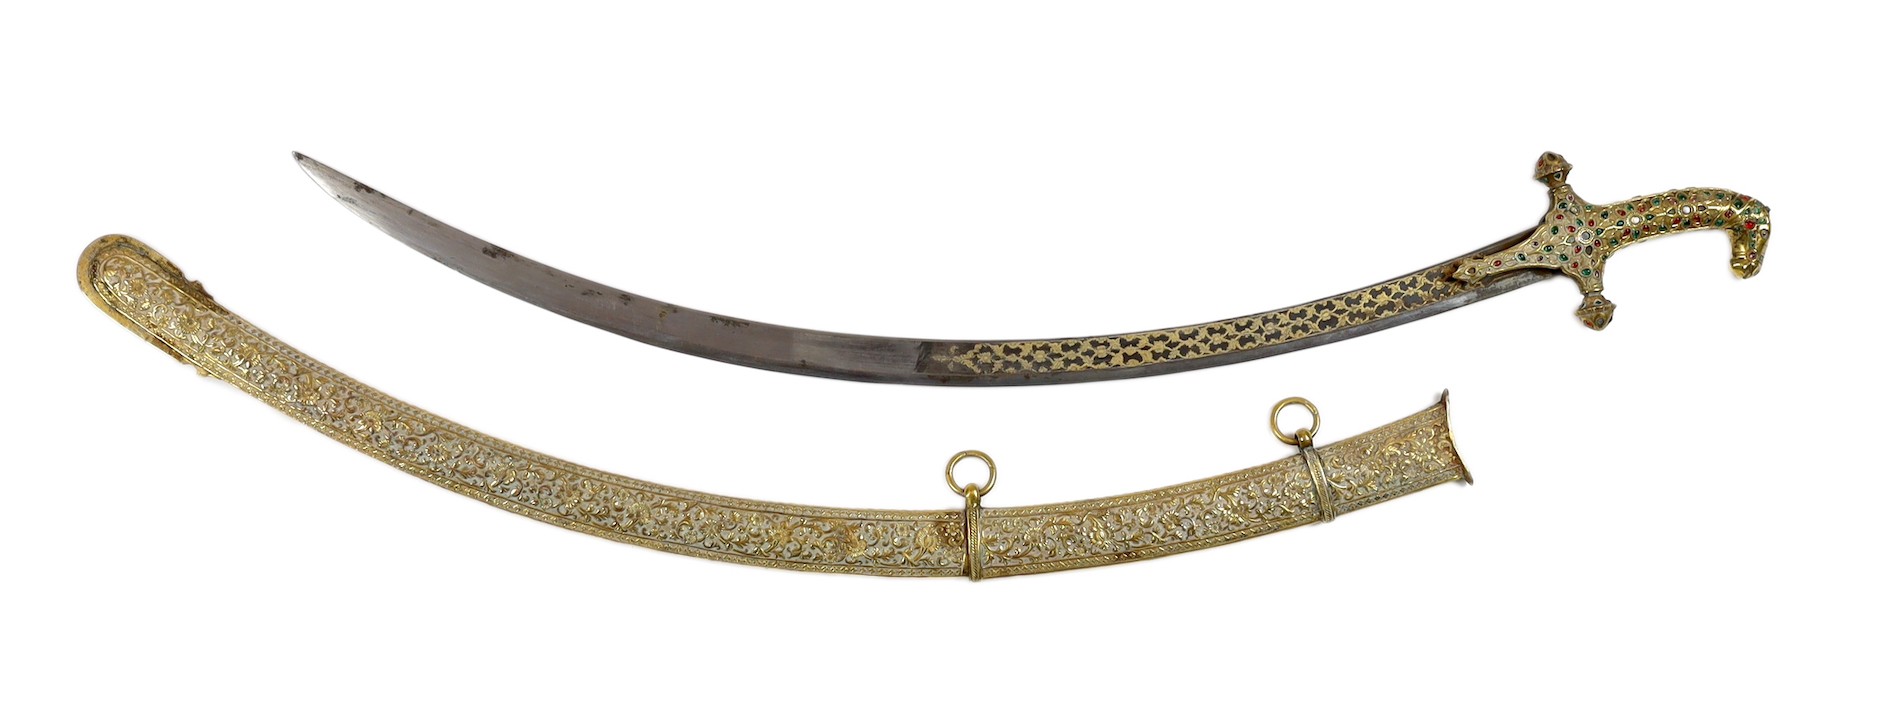 A fine Indian gilt copper and paste mounted sword (shamshir), Kutch, 19th century, sword 79cm long, scabbard 75cm long                                                                                                      